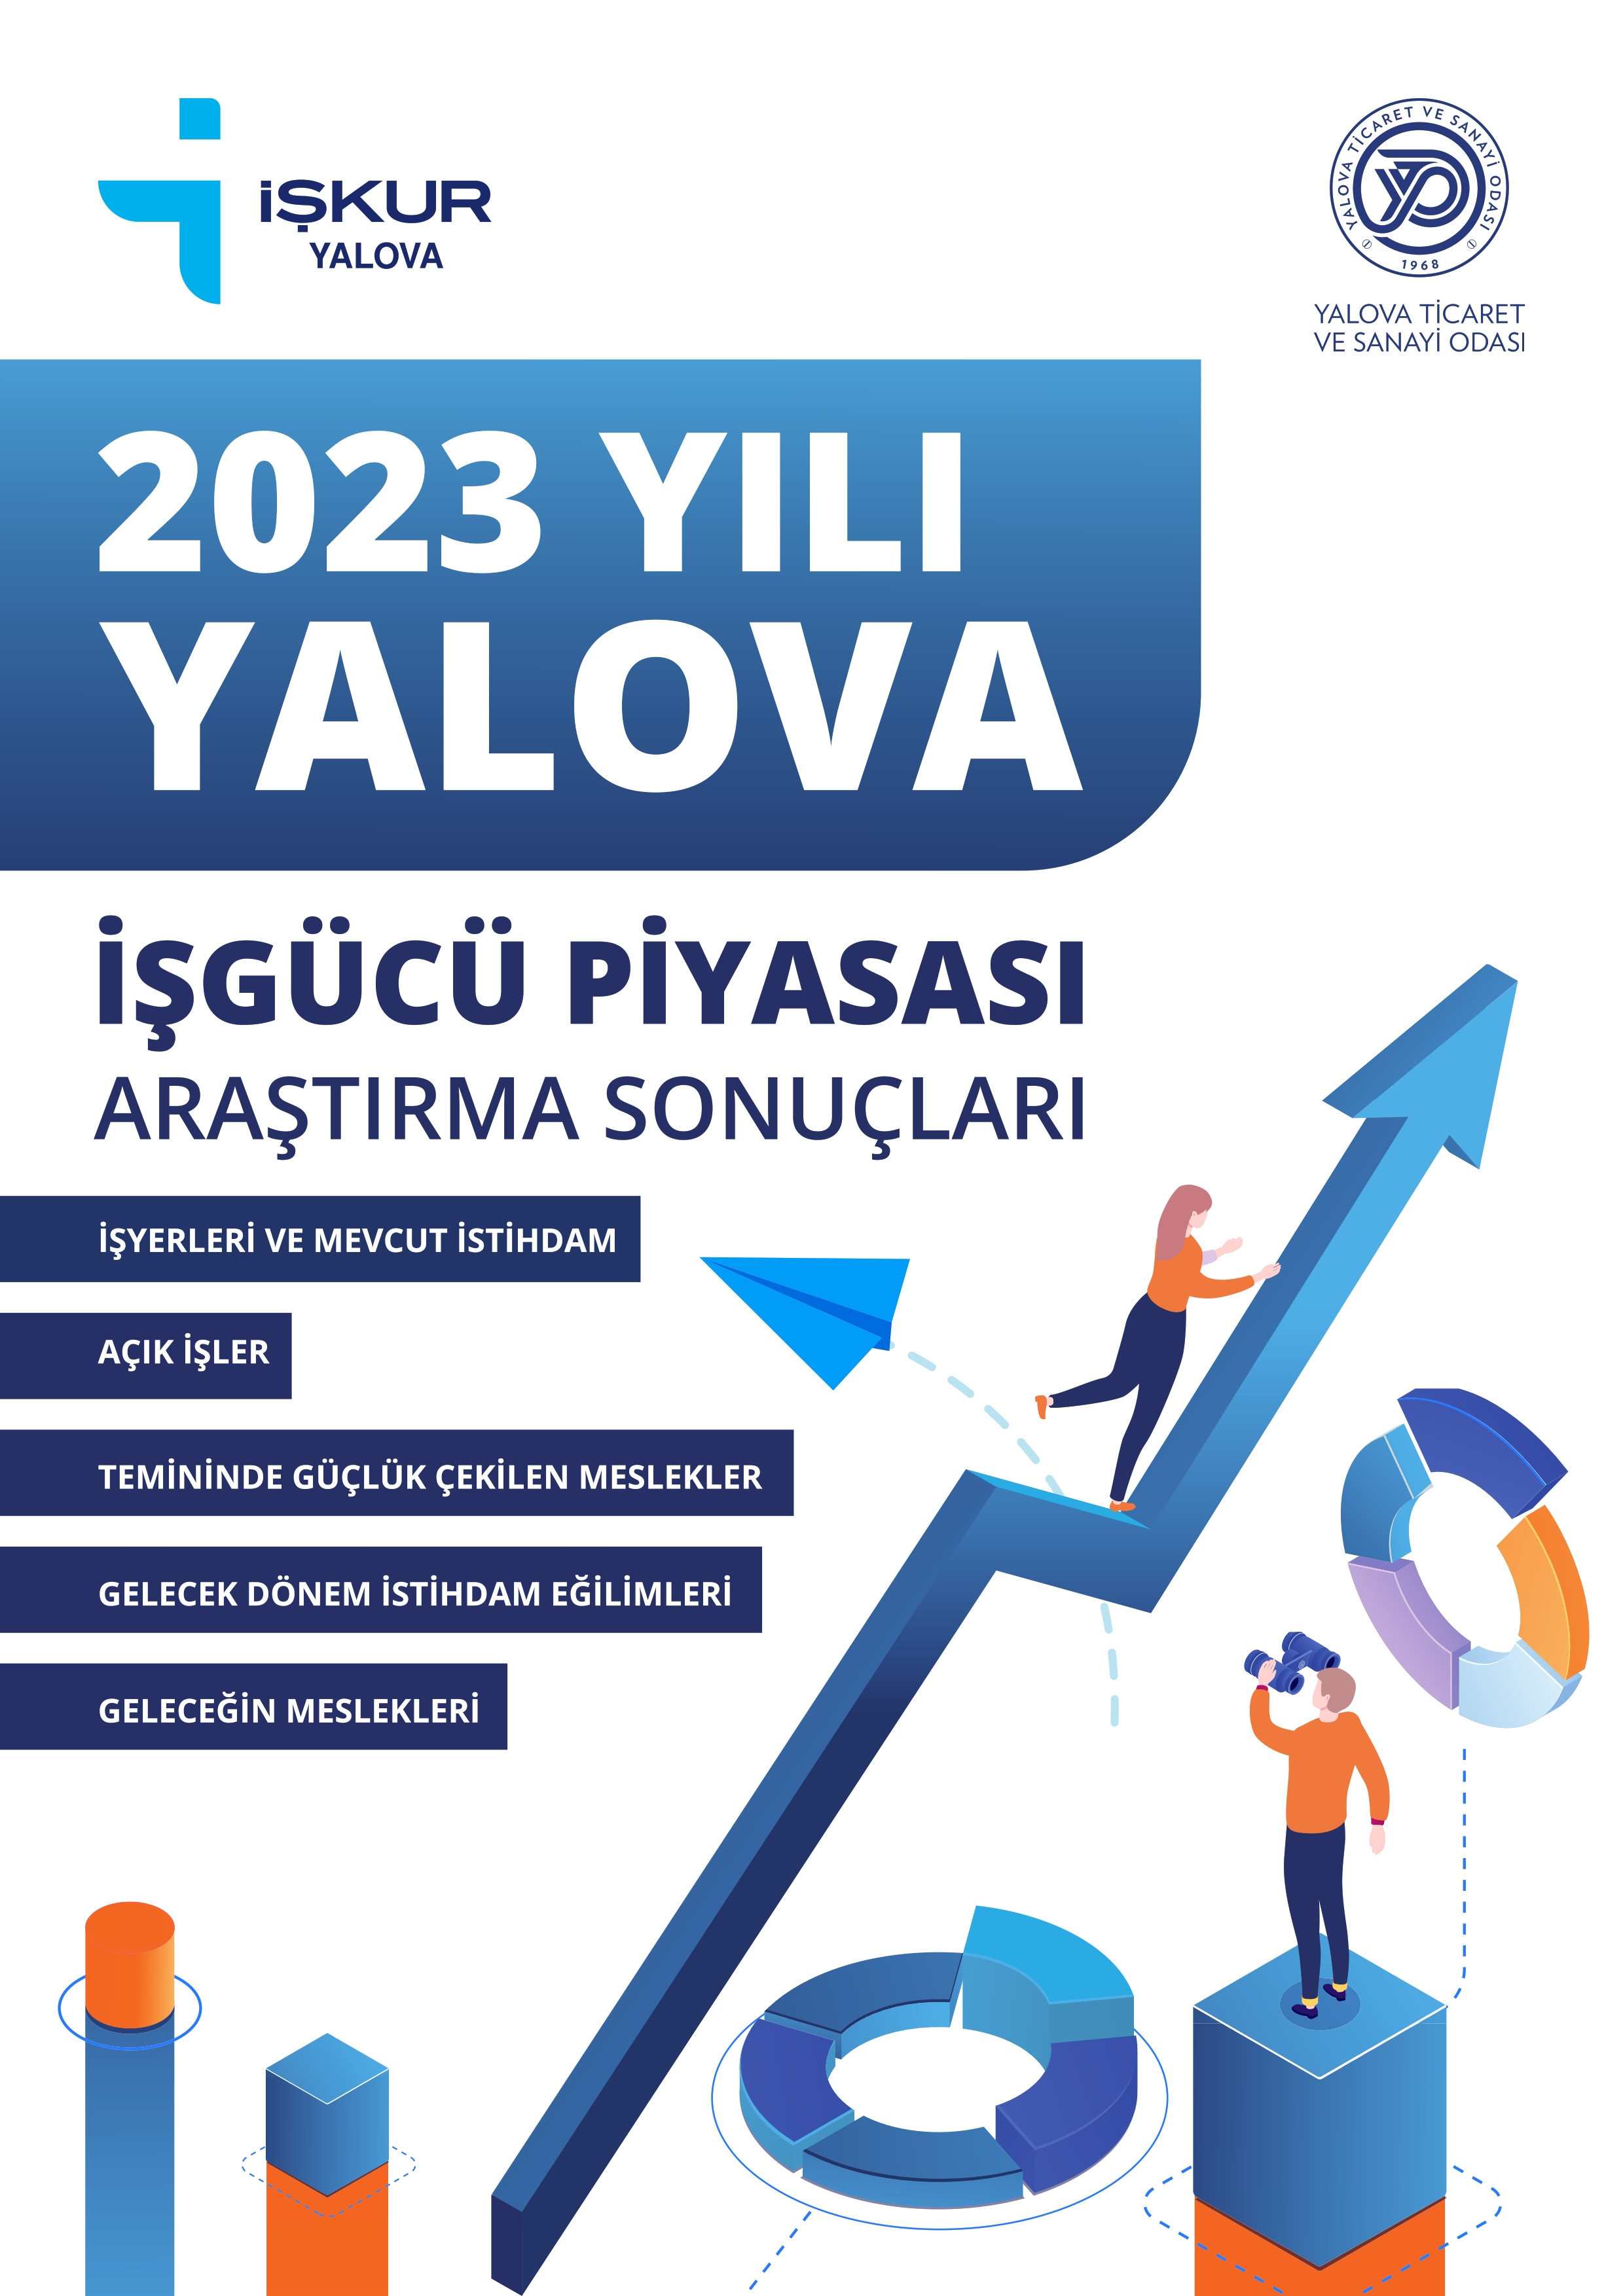 2023 Yalova Labour Market Research Results